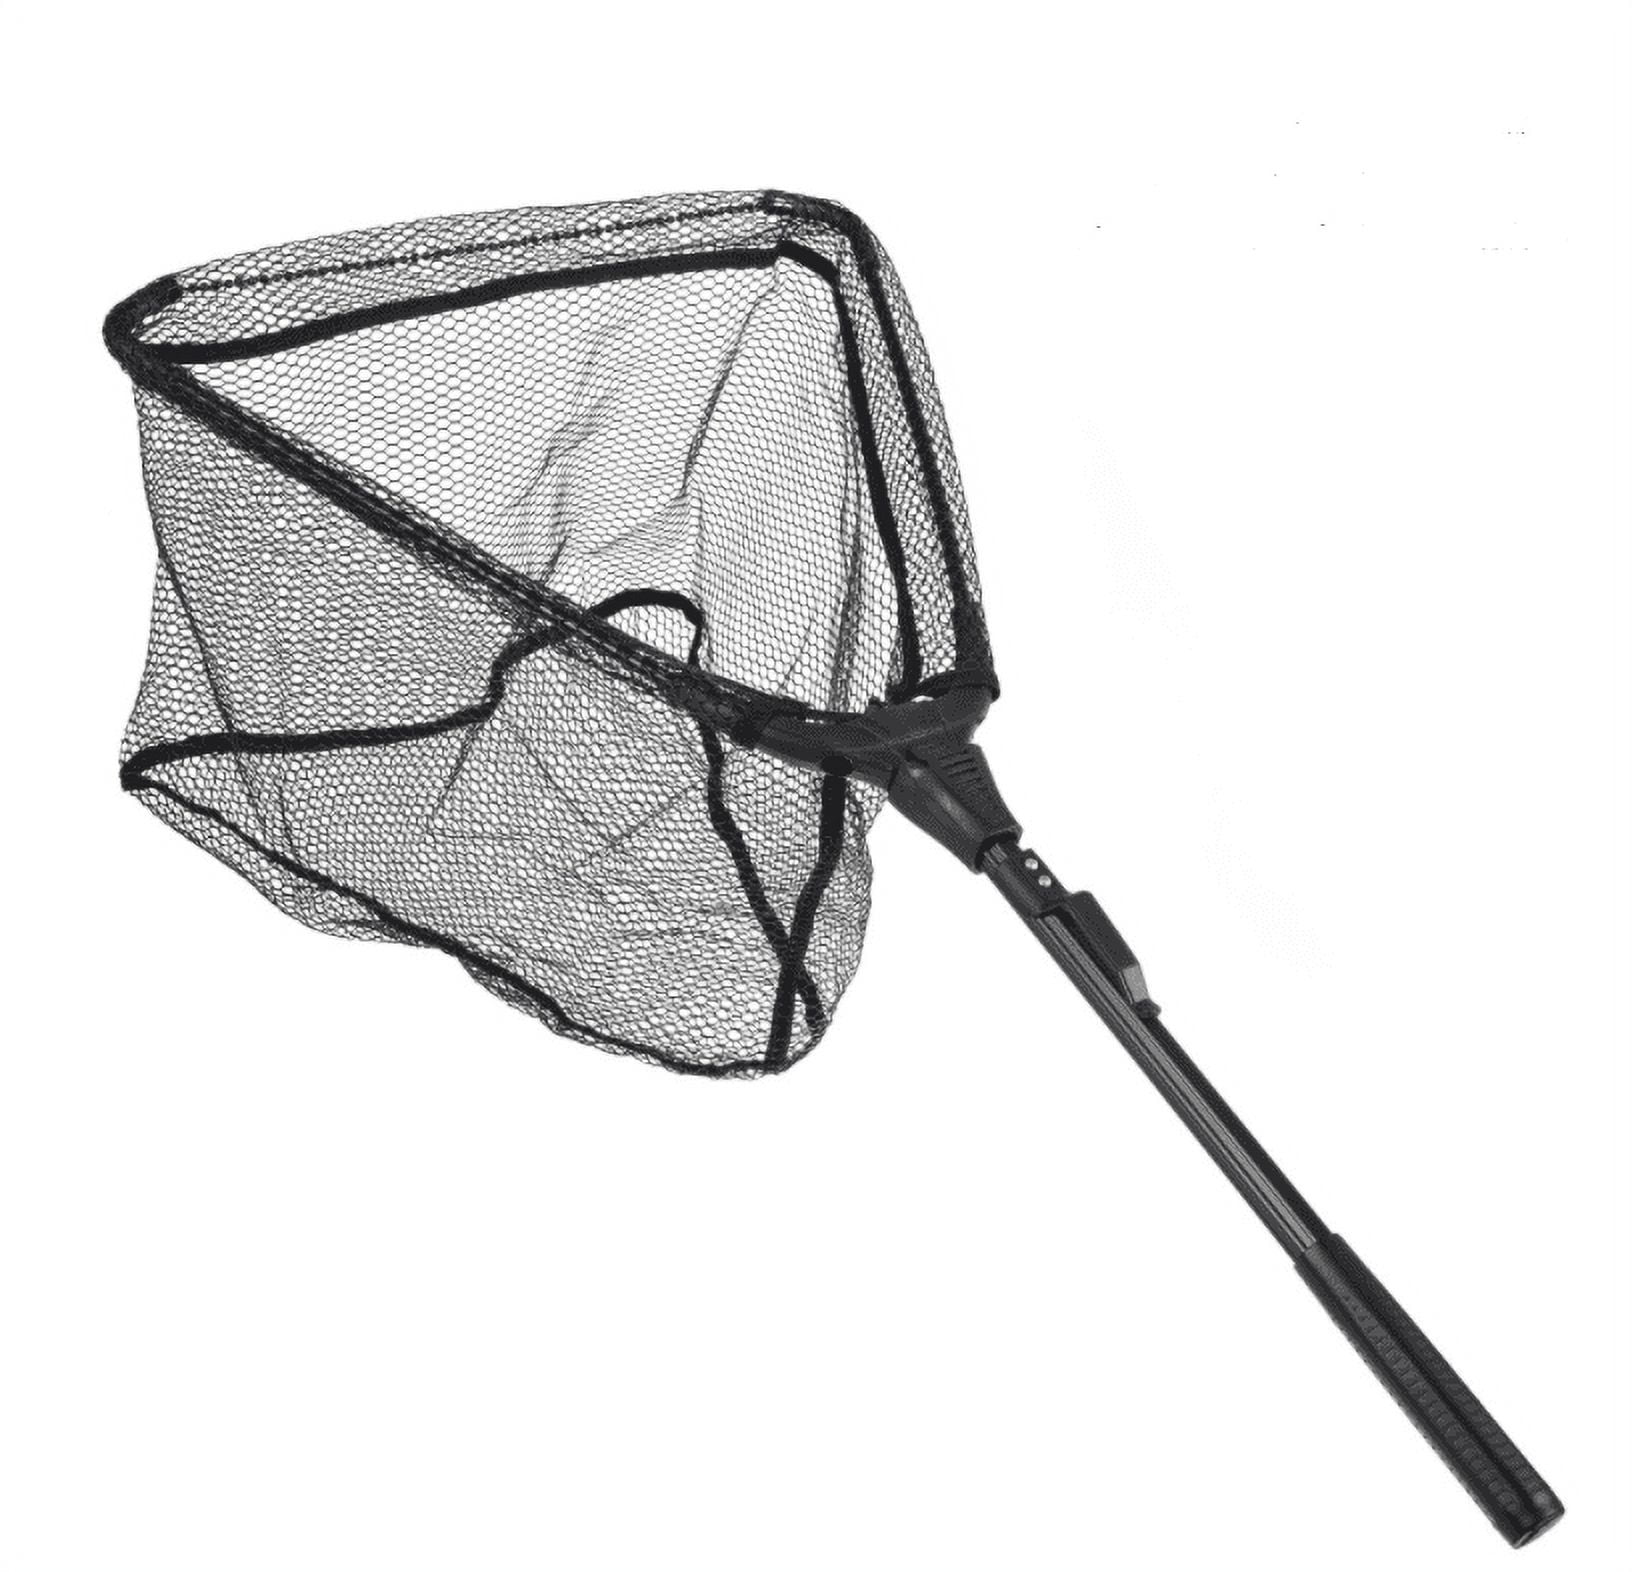 Fishing Net Folding Landing Net - Collapsible Fishing Nets with